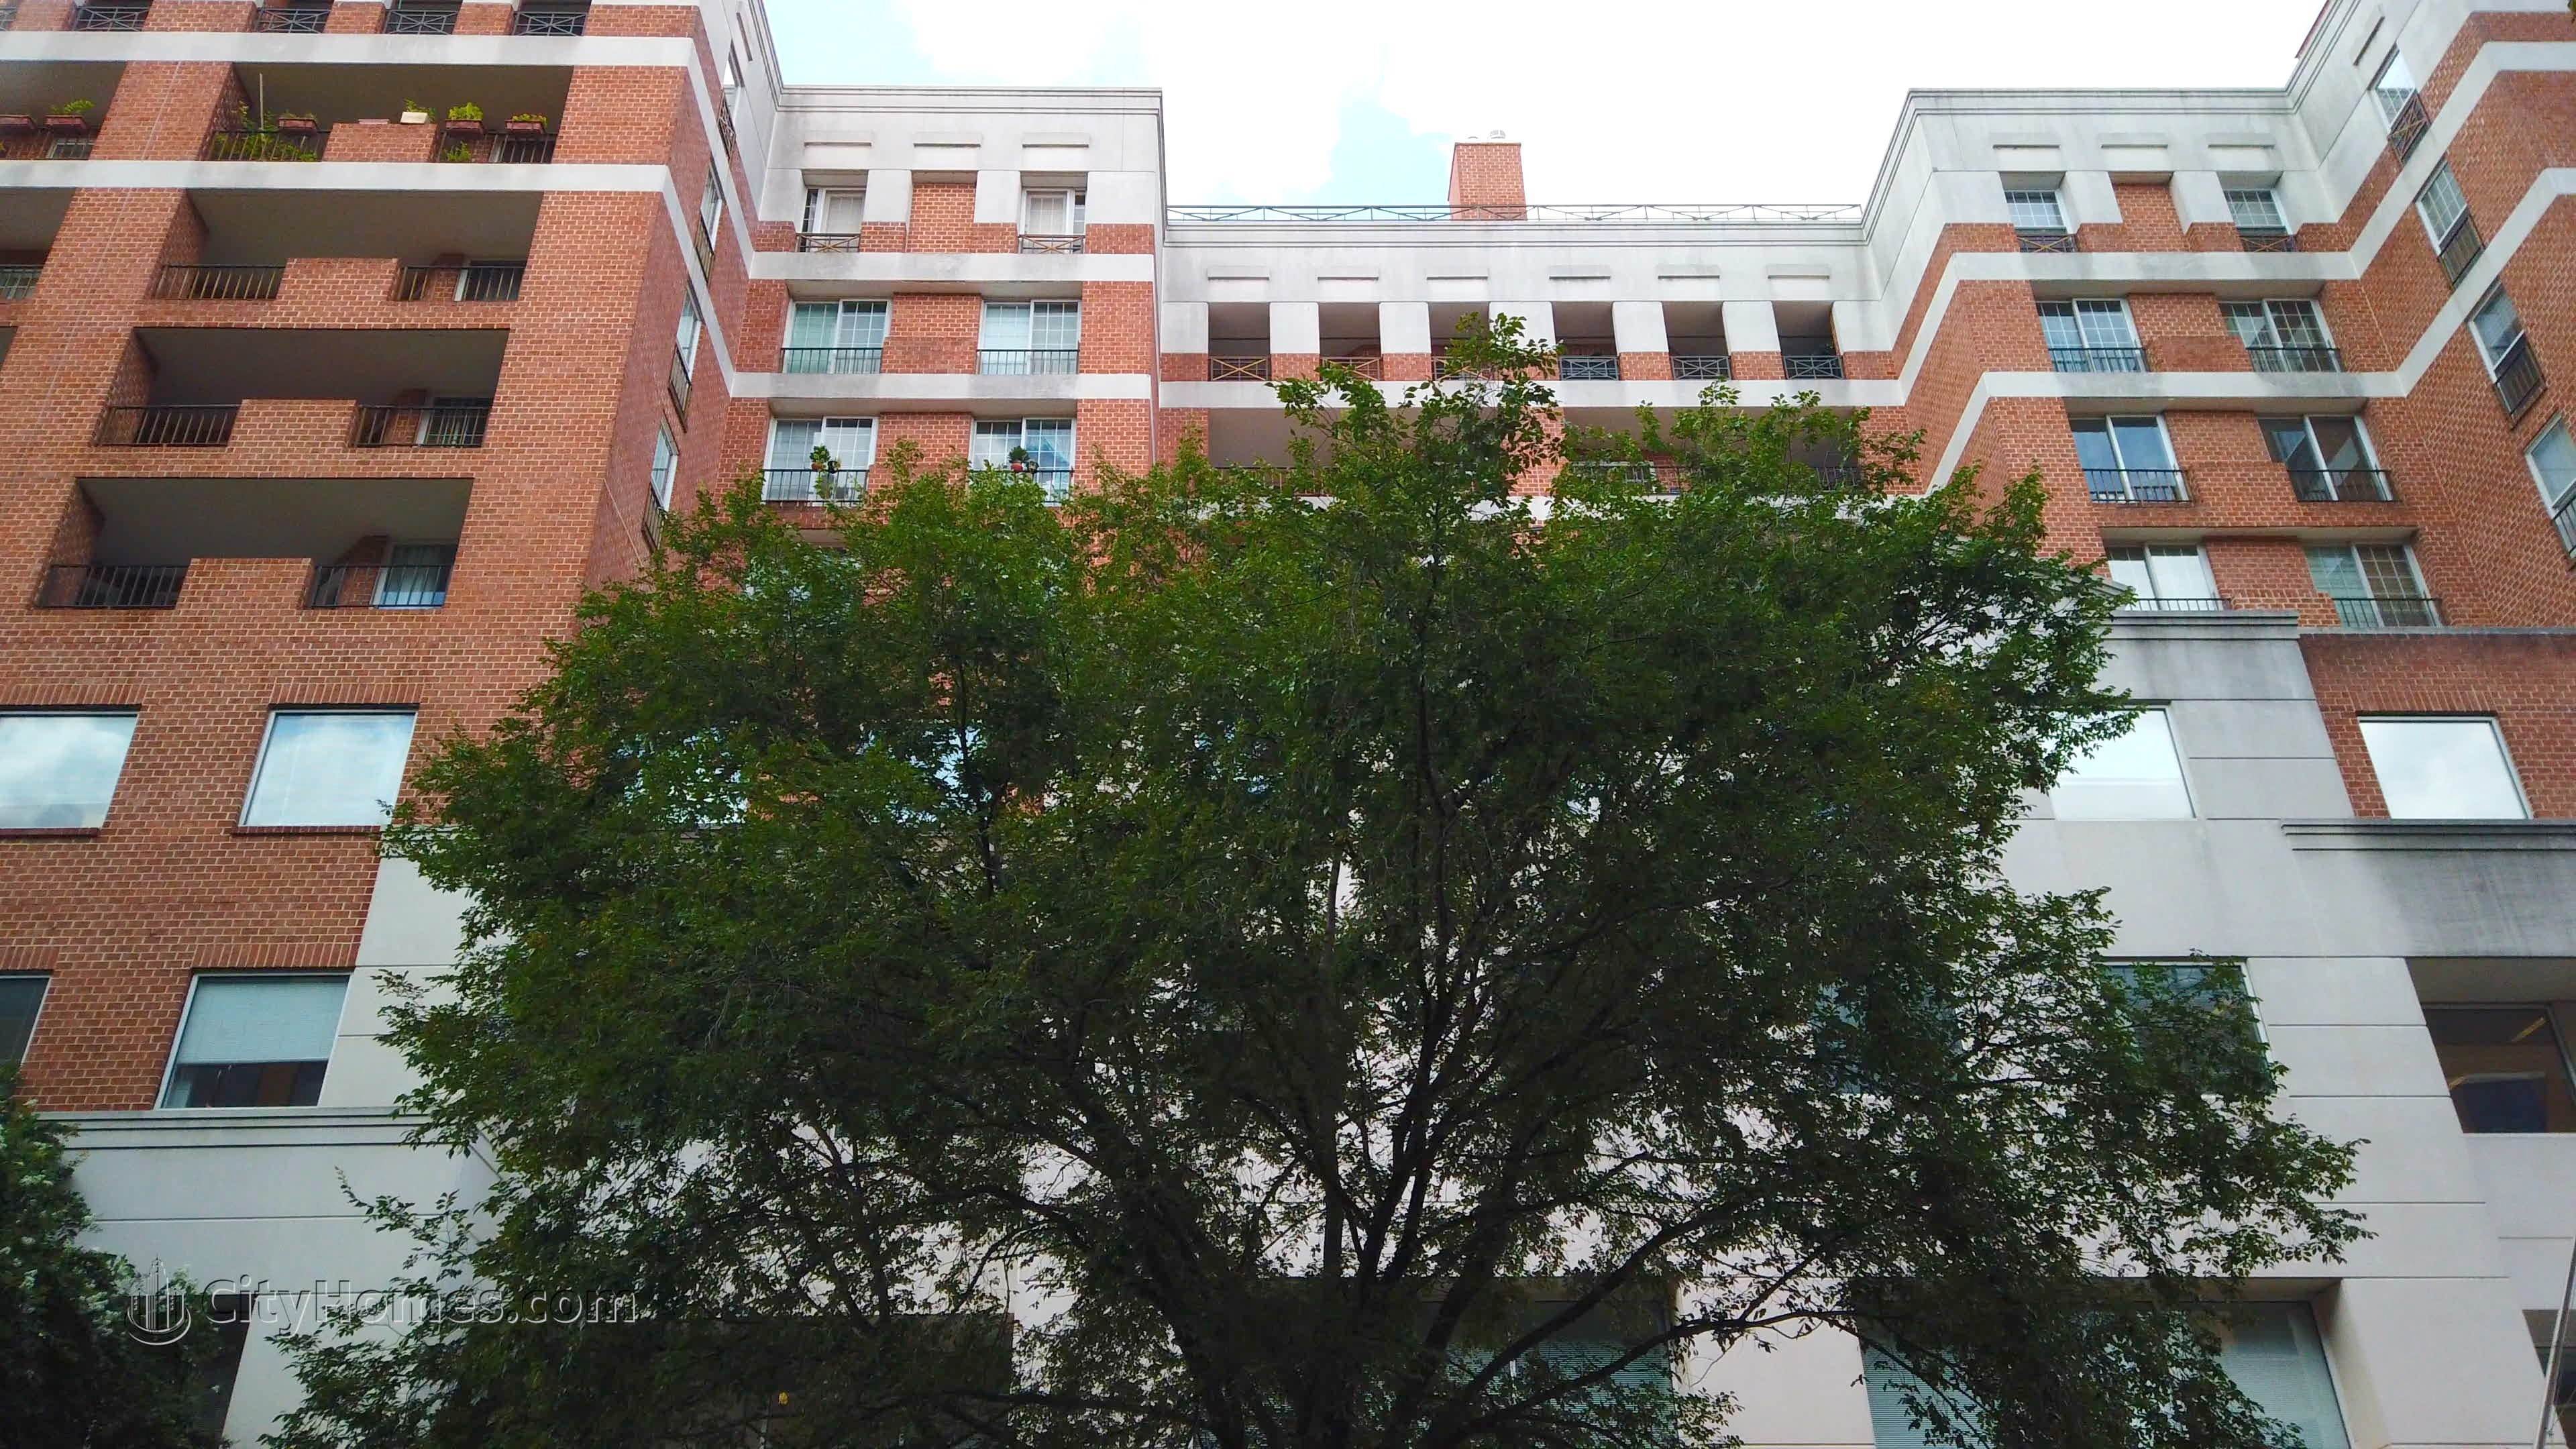 6. Metropolitan Condos gebouw op 1230 23rd St NW, West End, Washington, DC 20037